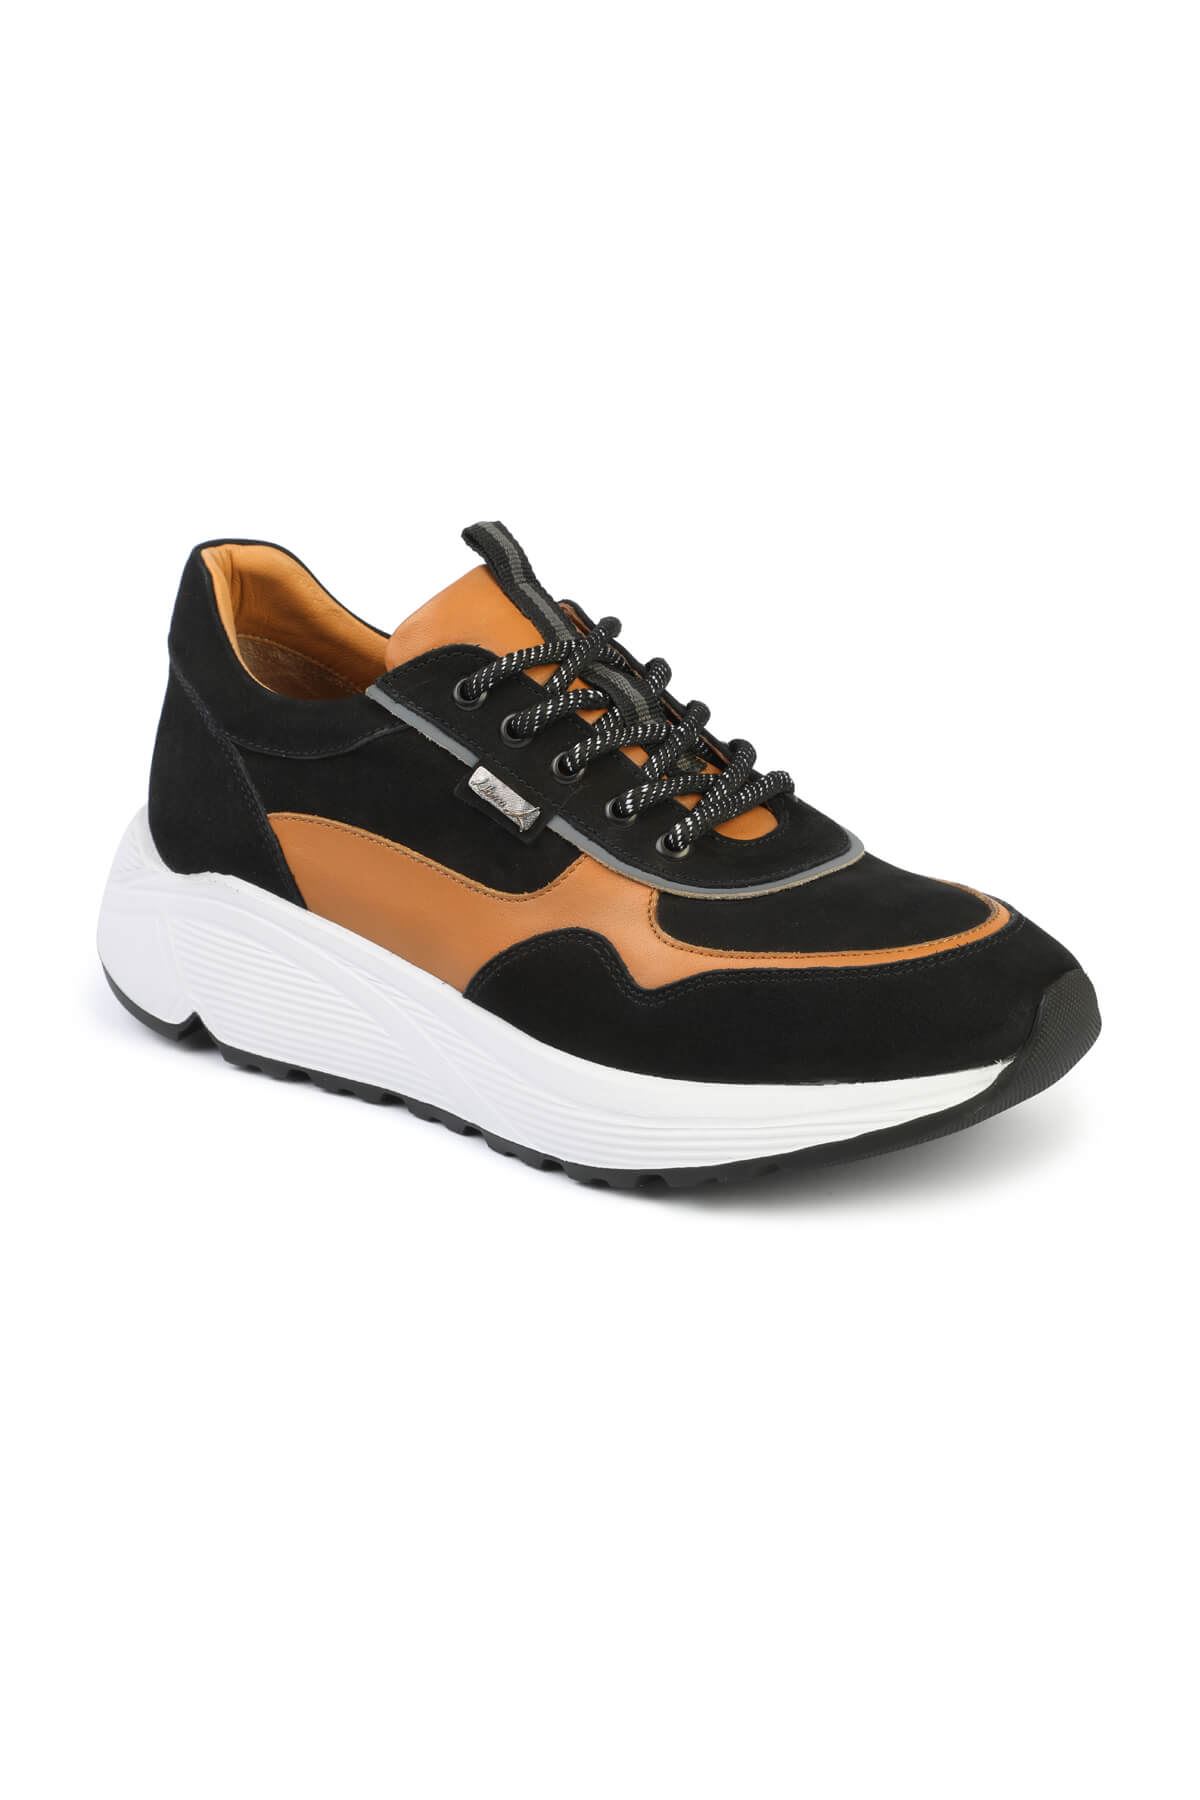 Libero 3158 S.Tan Sports Shoes